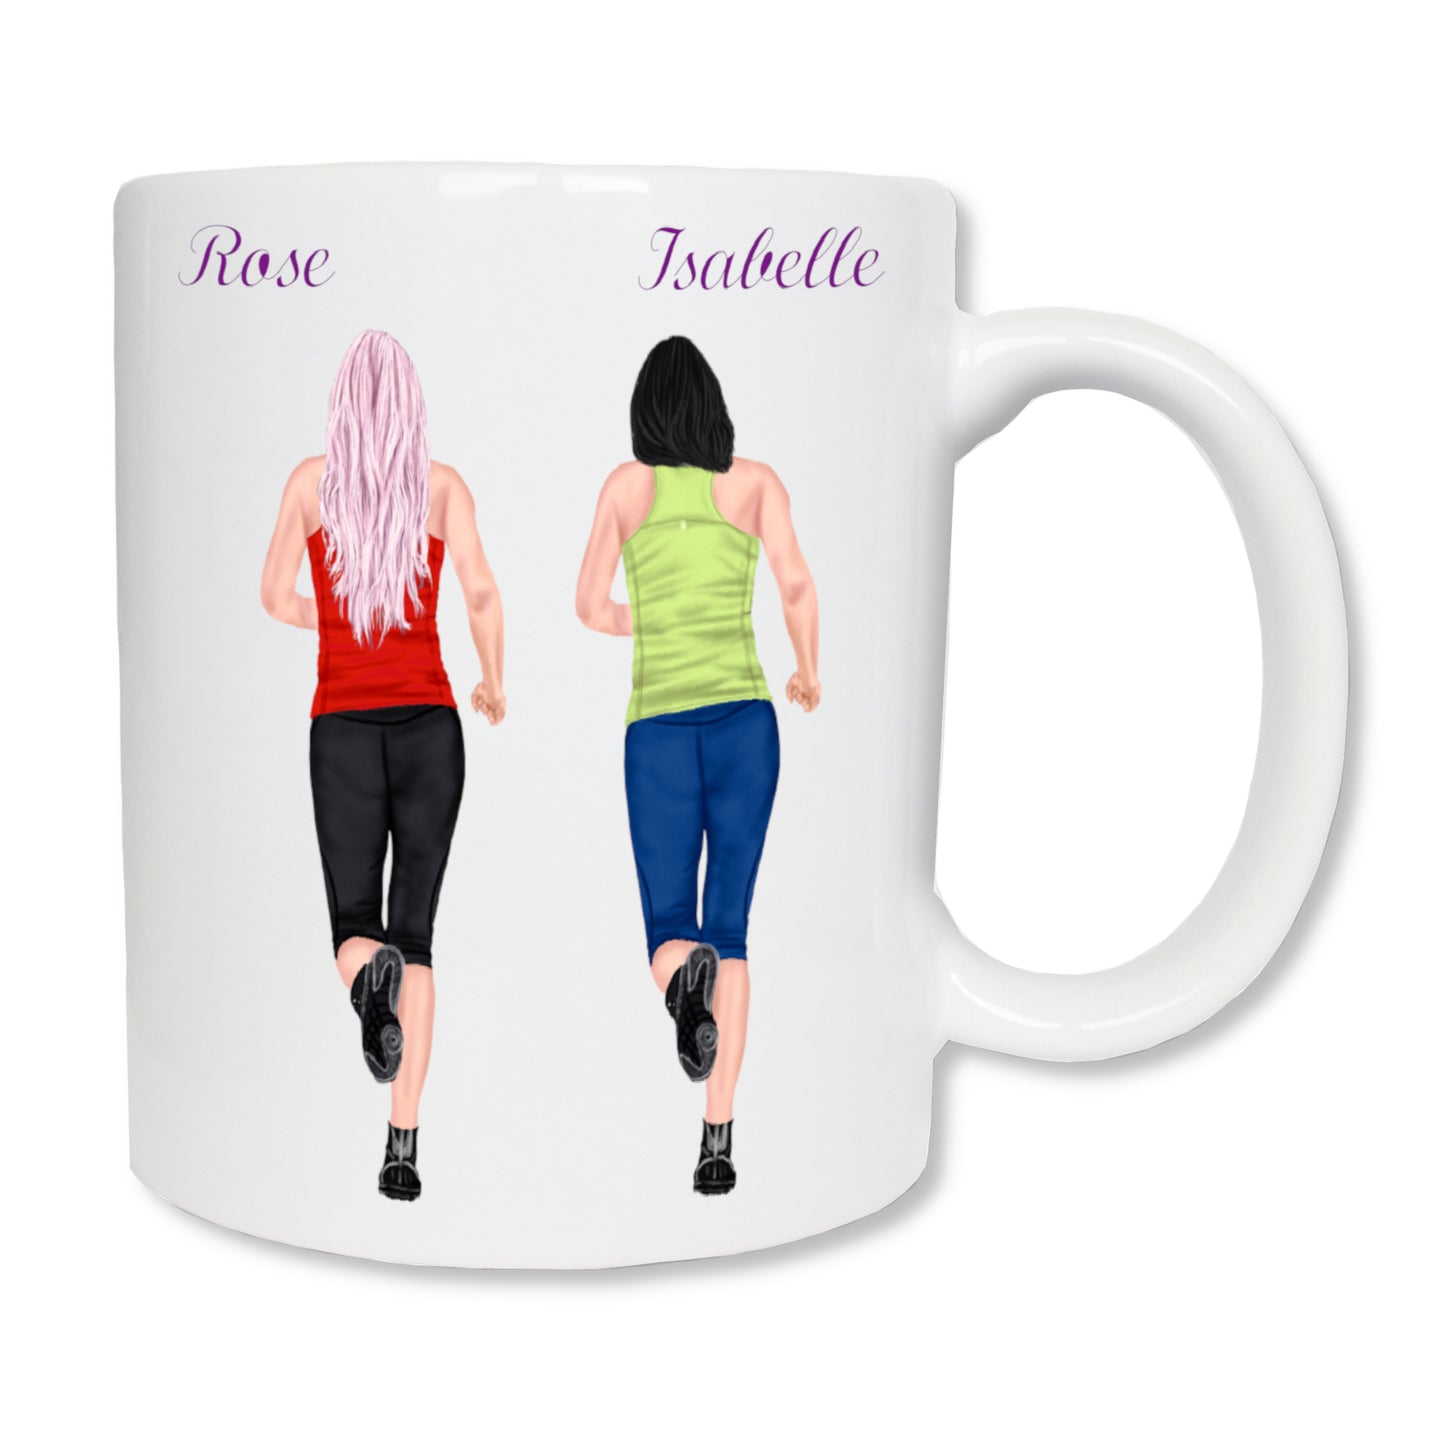 Personalized mug 2 joggers 